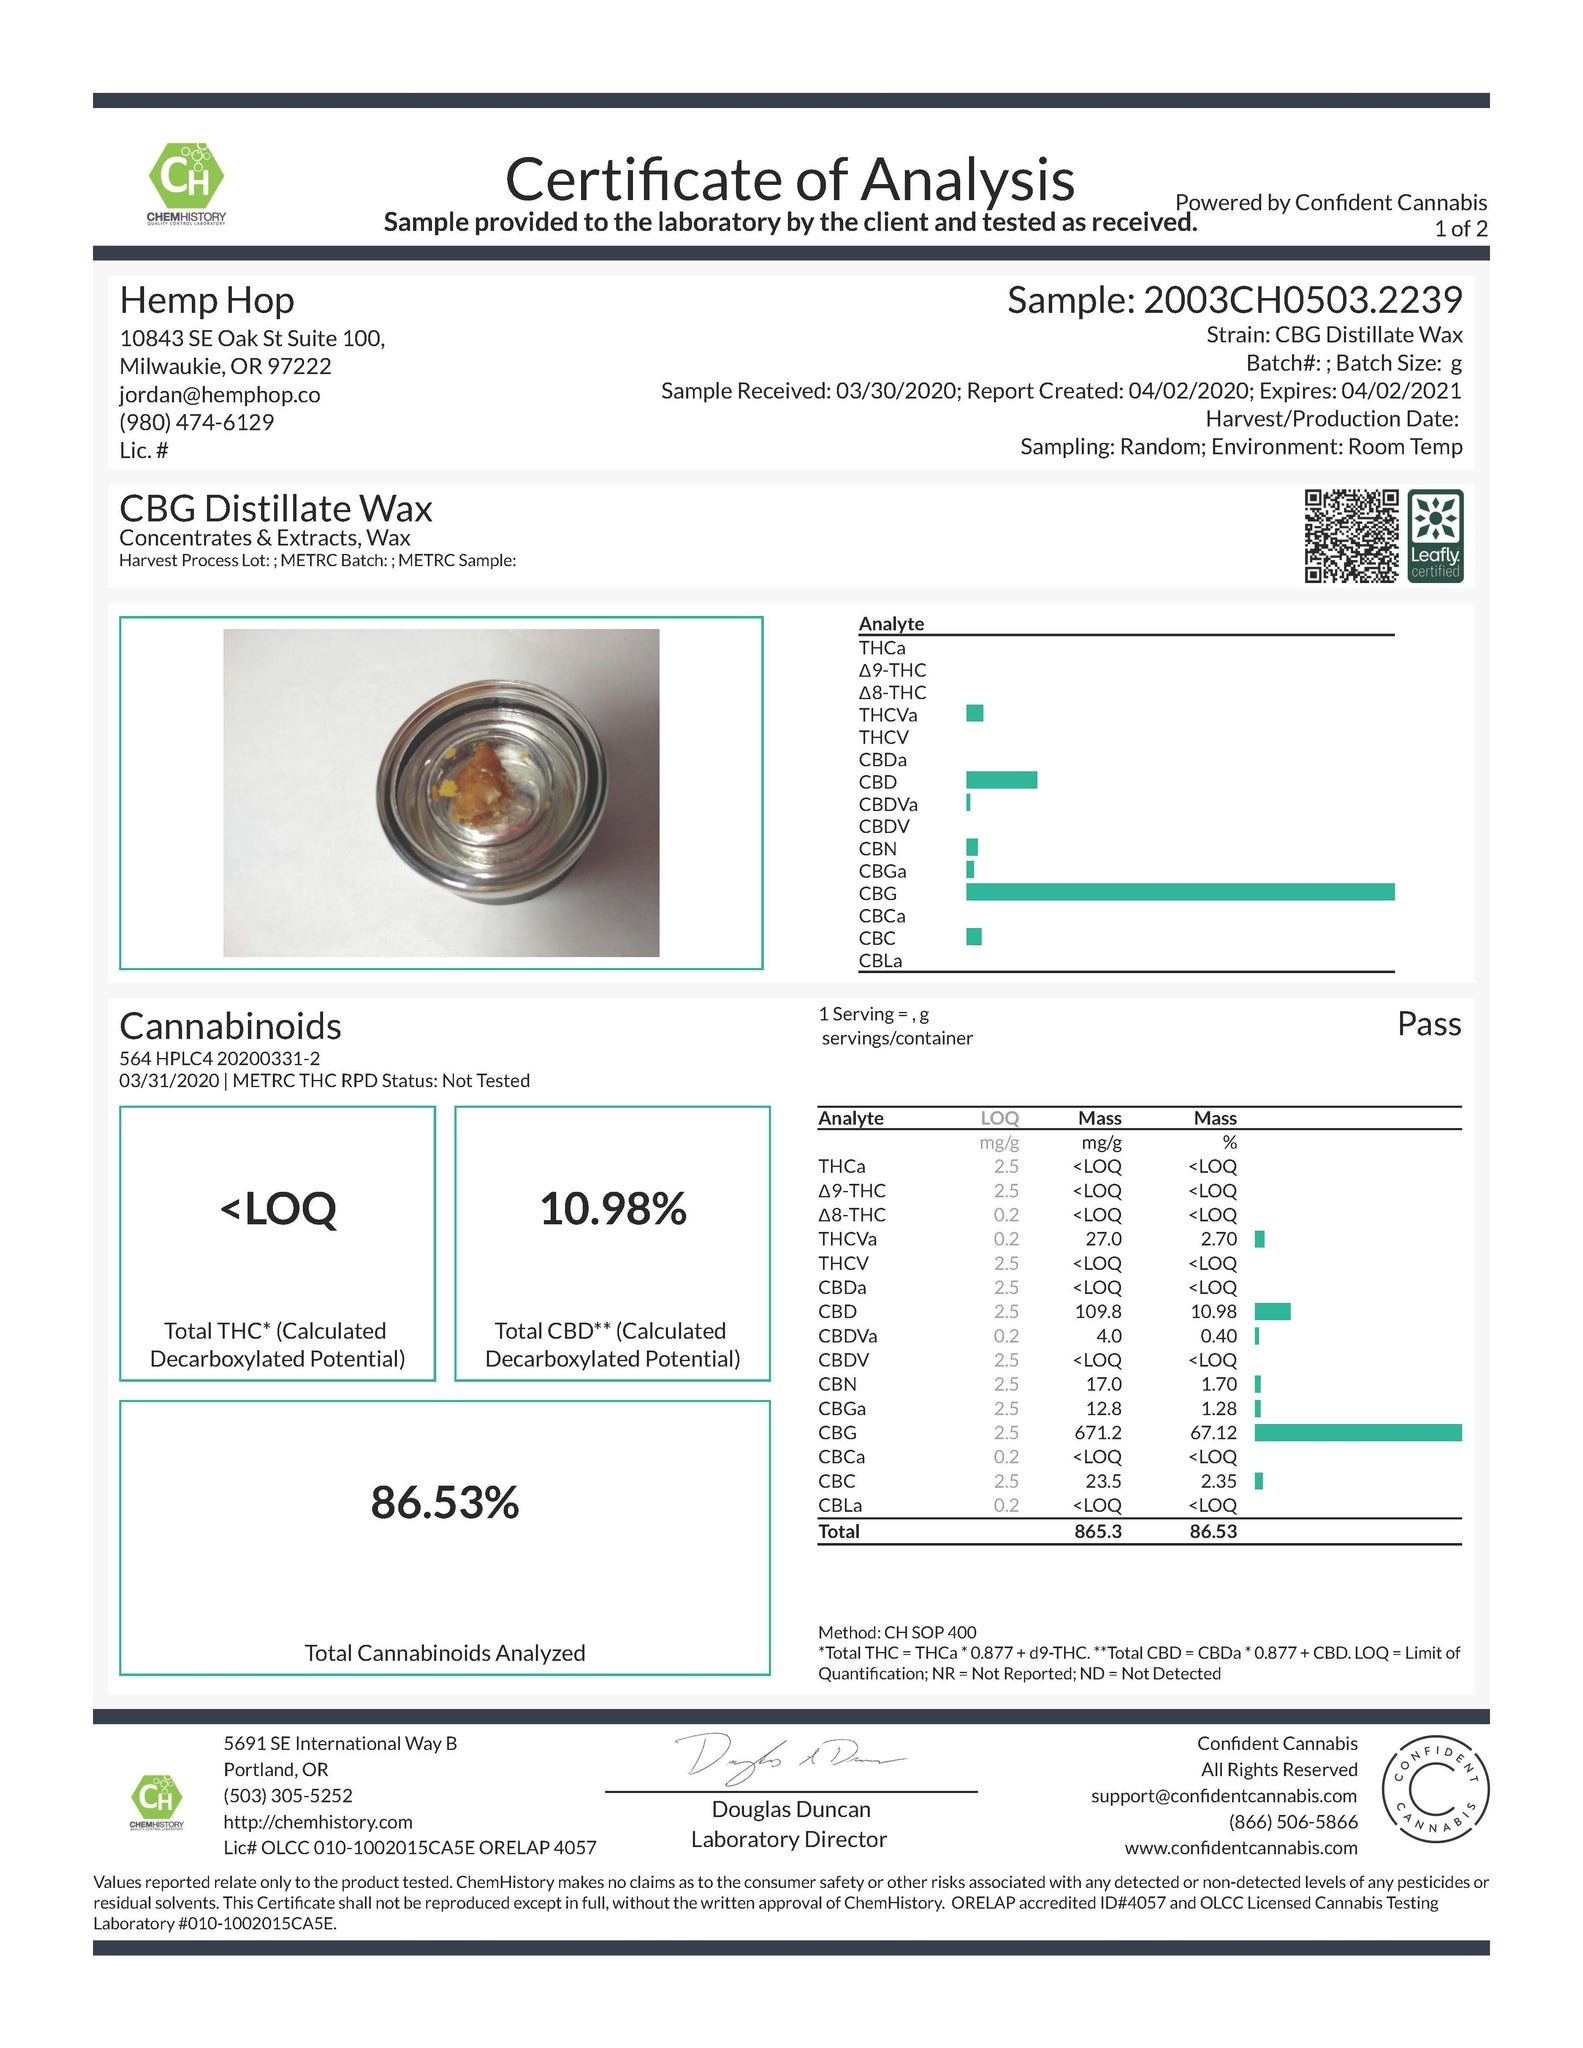 CBD distillate wax cannabinoids lab result